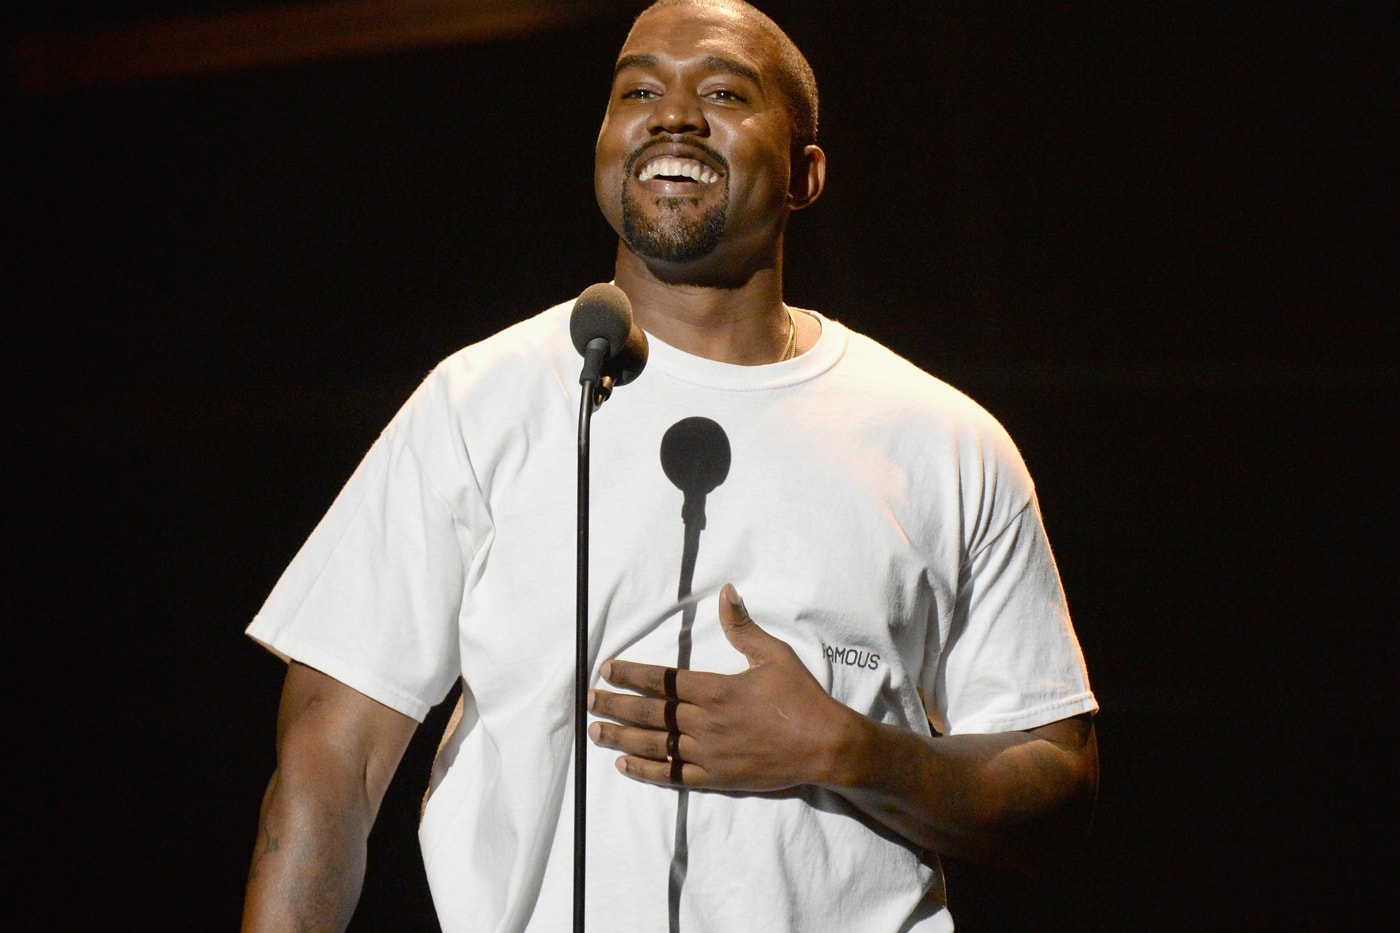 Kanye West Is Happy for Leonardo DiCaprio's Oscar Win